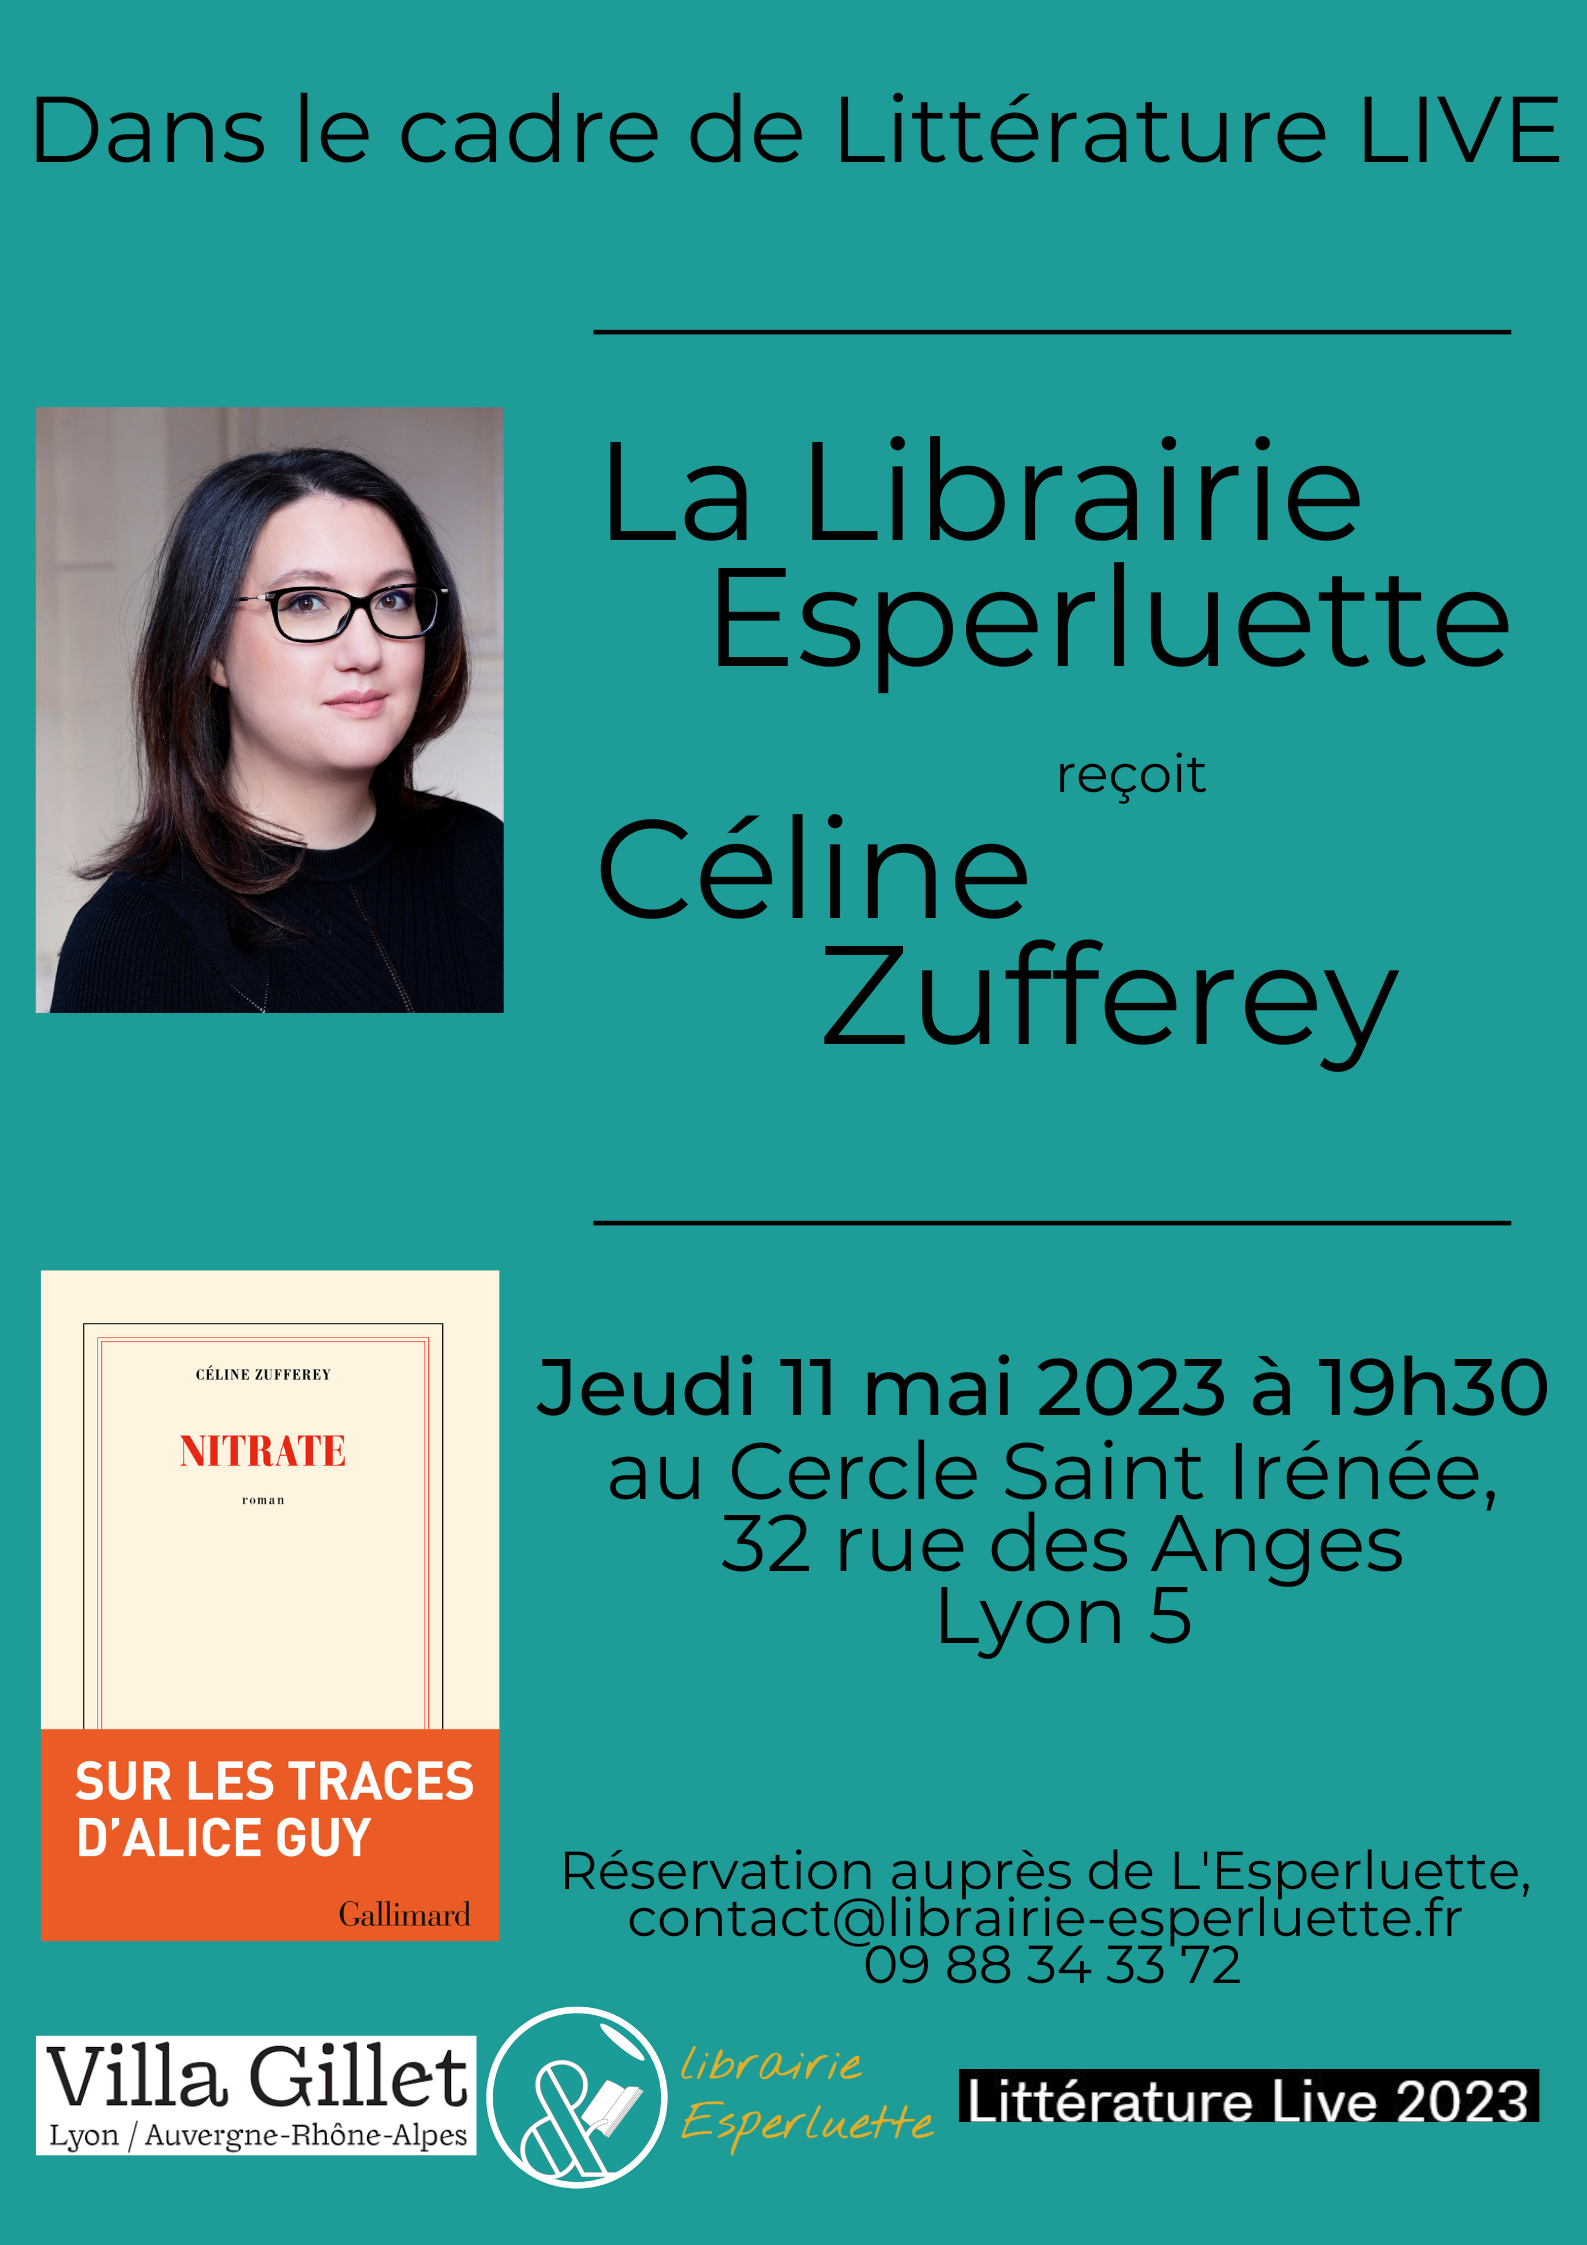 You are currently viewing Littérature Live 2023 : La librairie Esperluette reçoit Céline Zufferey